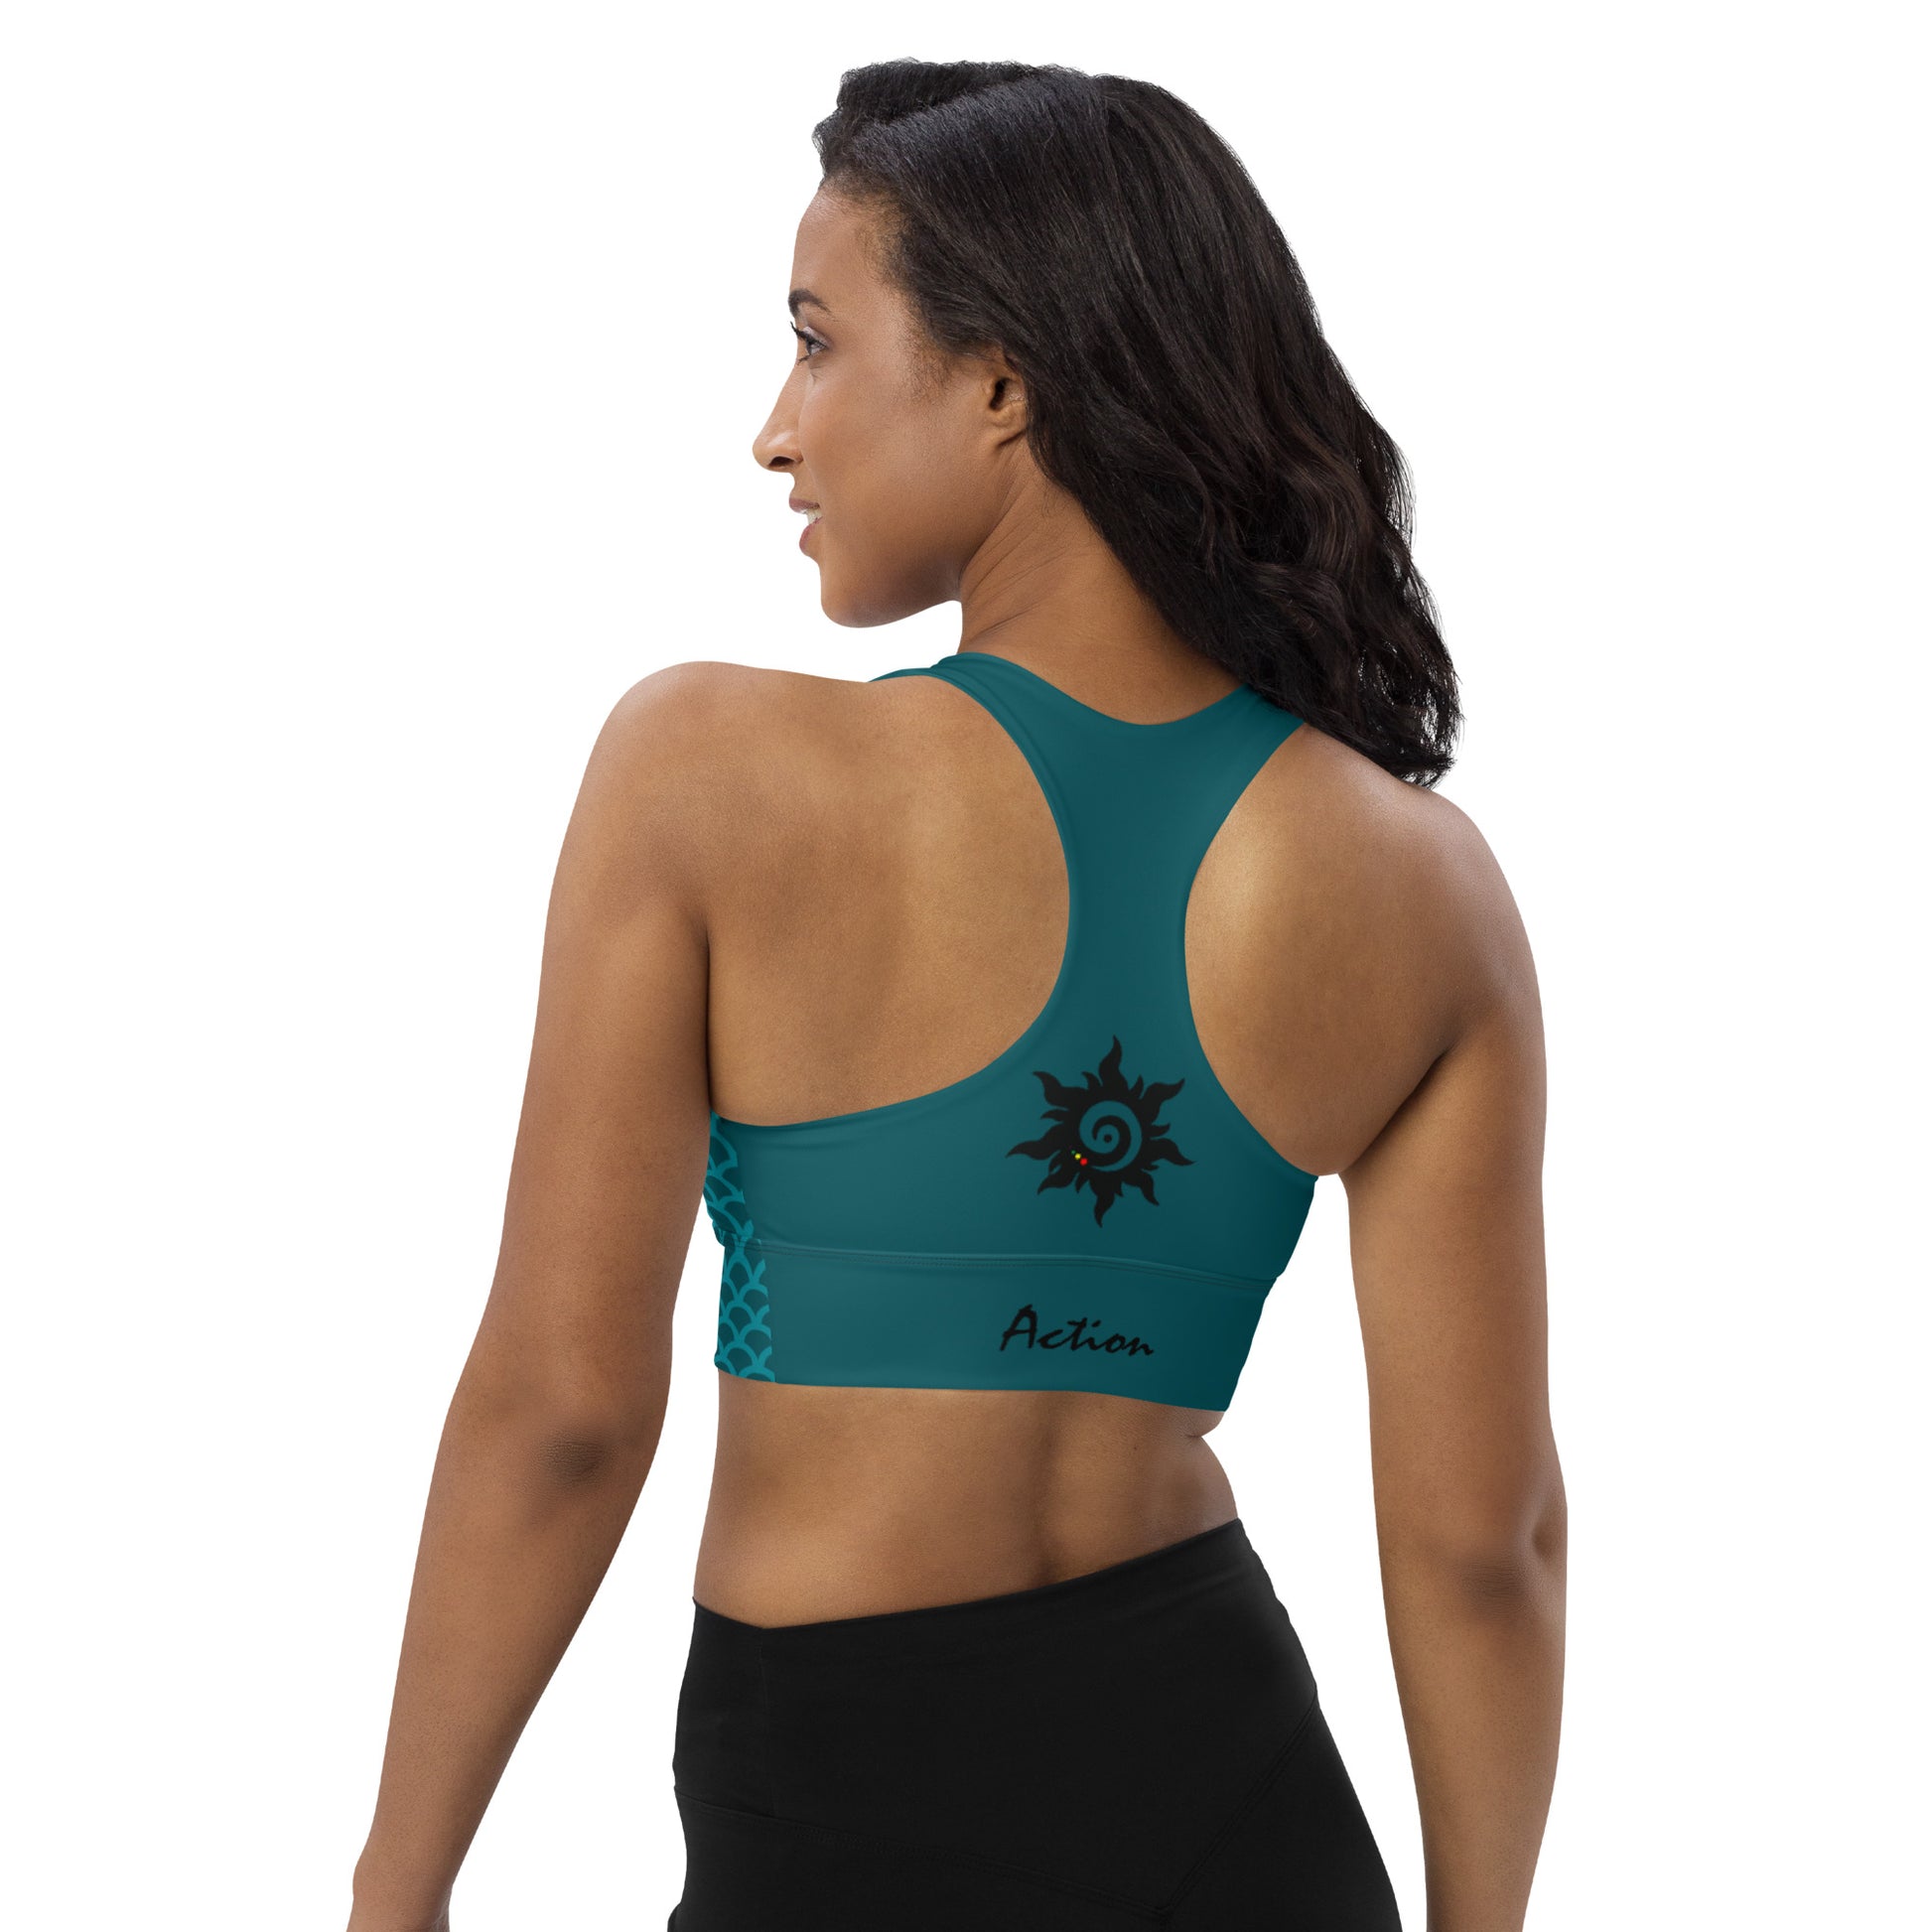 Longline sports bra 2 / Fitness Woman's bra.